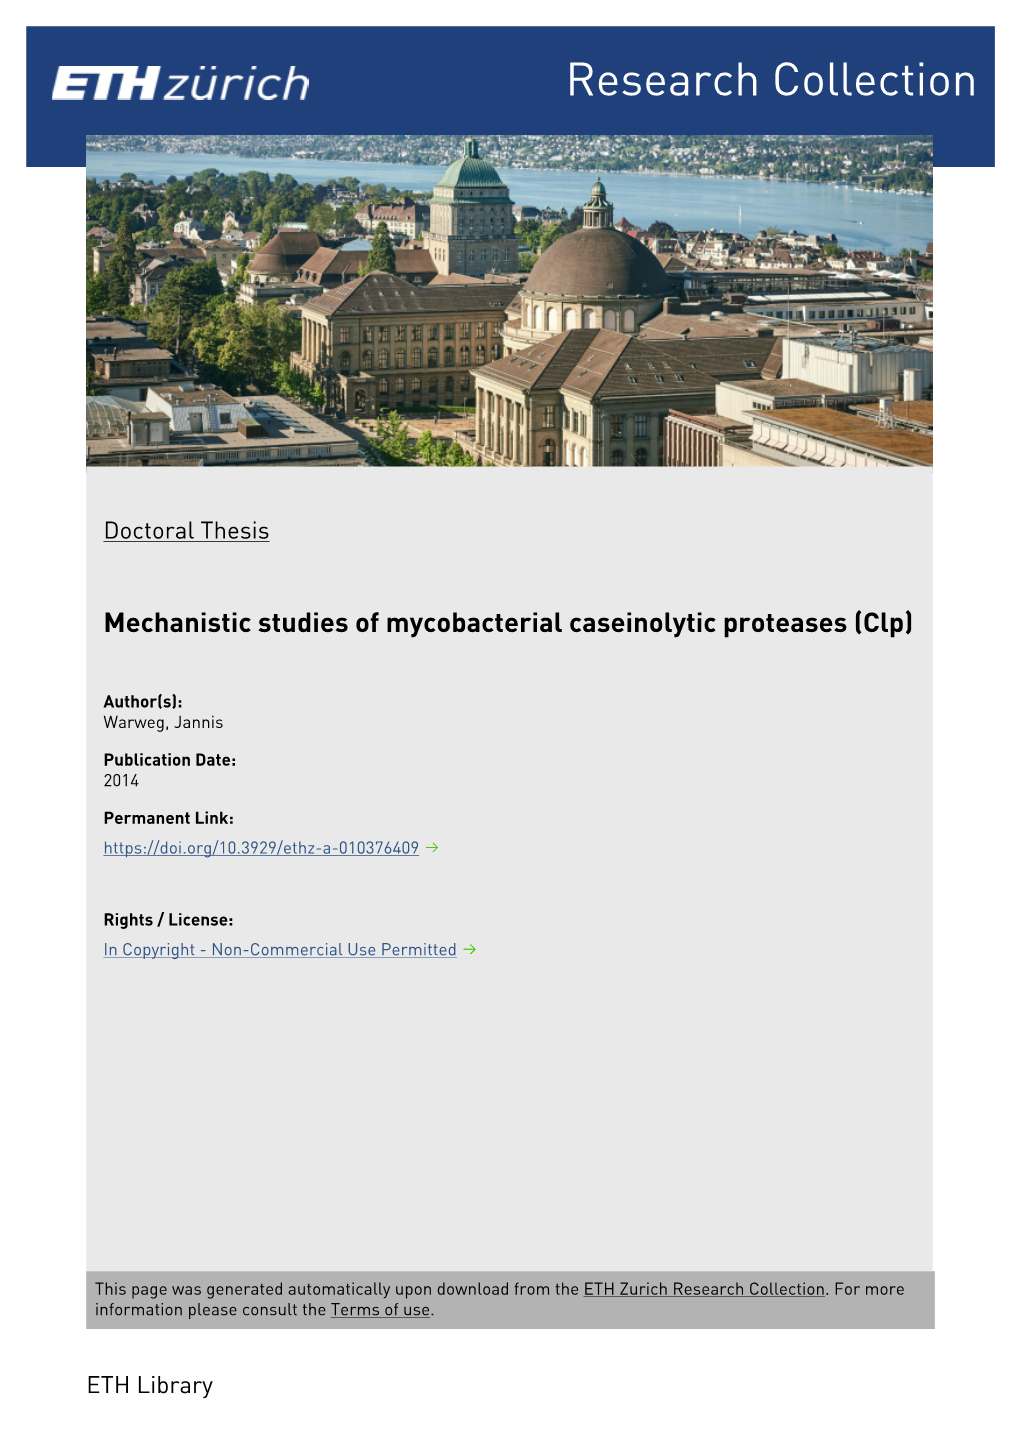 Mechanistic Studies of Mycobacterial Caseinolytic Proteases (Clp)